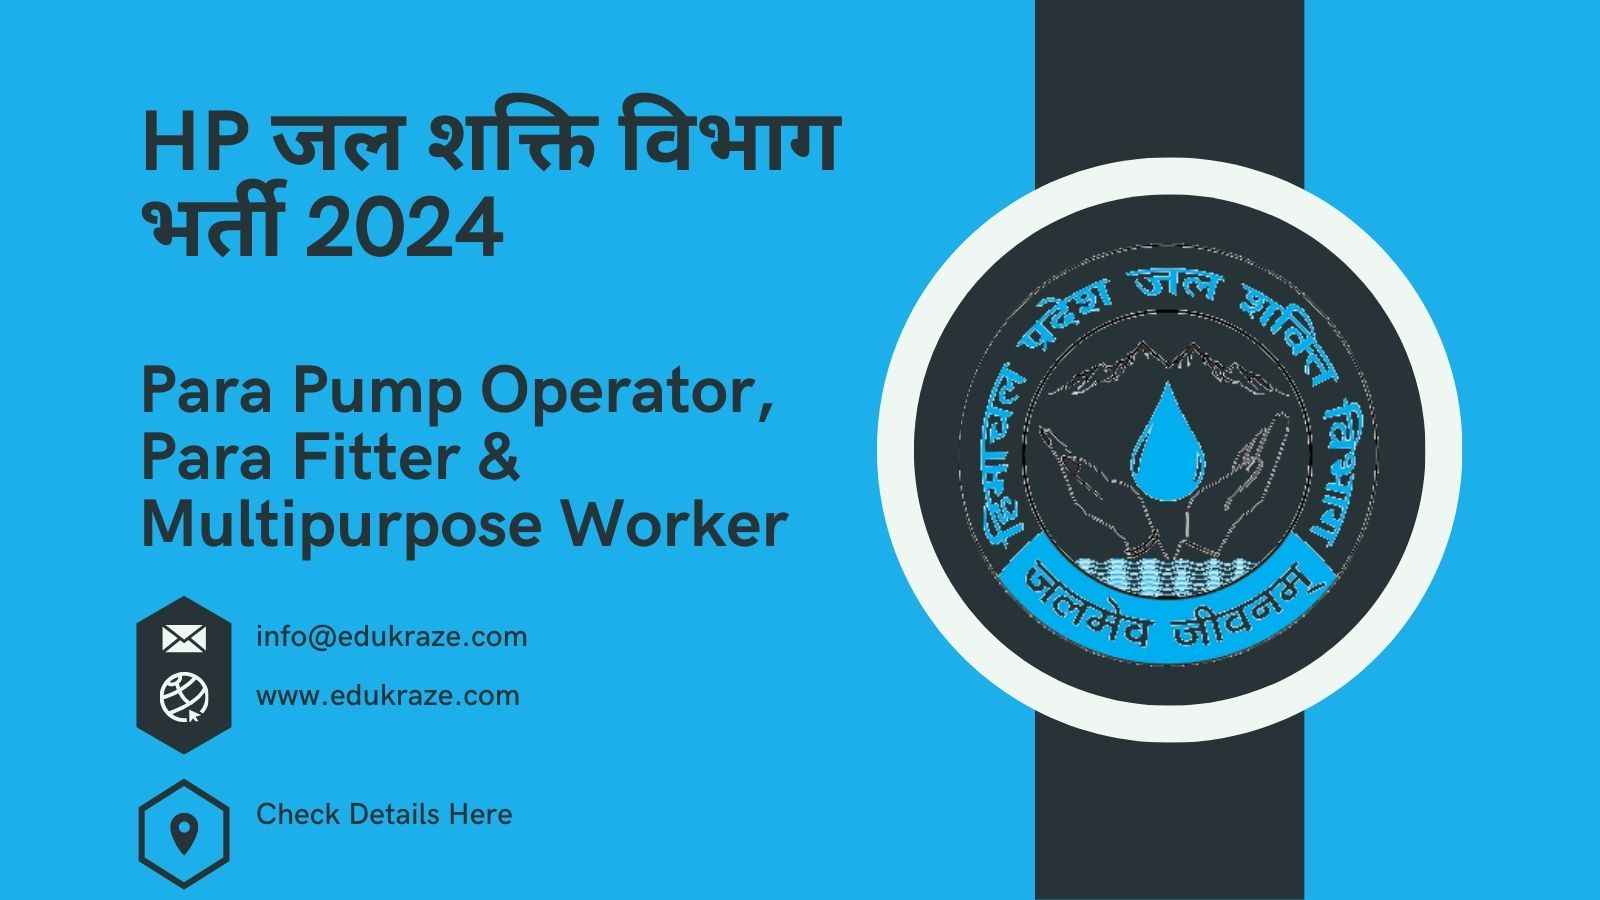 HP Jal Shakti Vibhag Division Jaisinghpur Recruitment 2024 for Para Pump Operator, Para Fitter & Multipurpose Worker